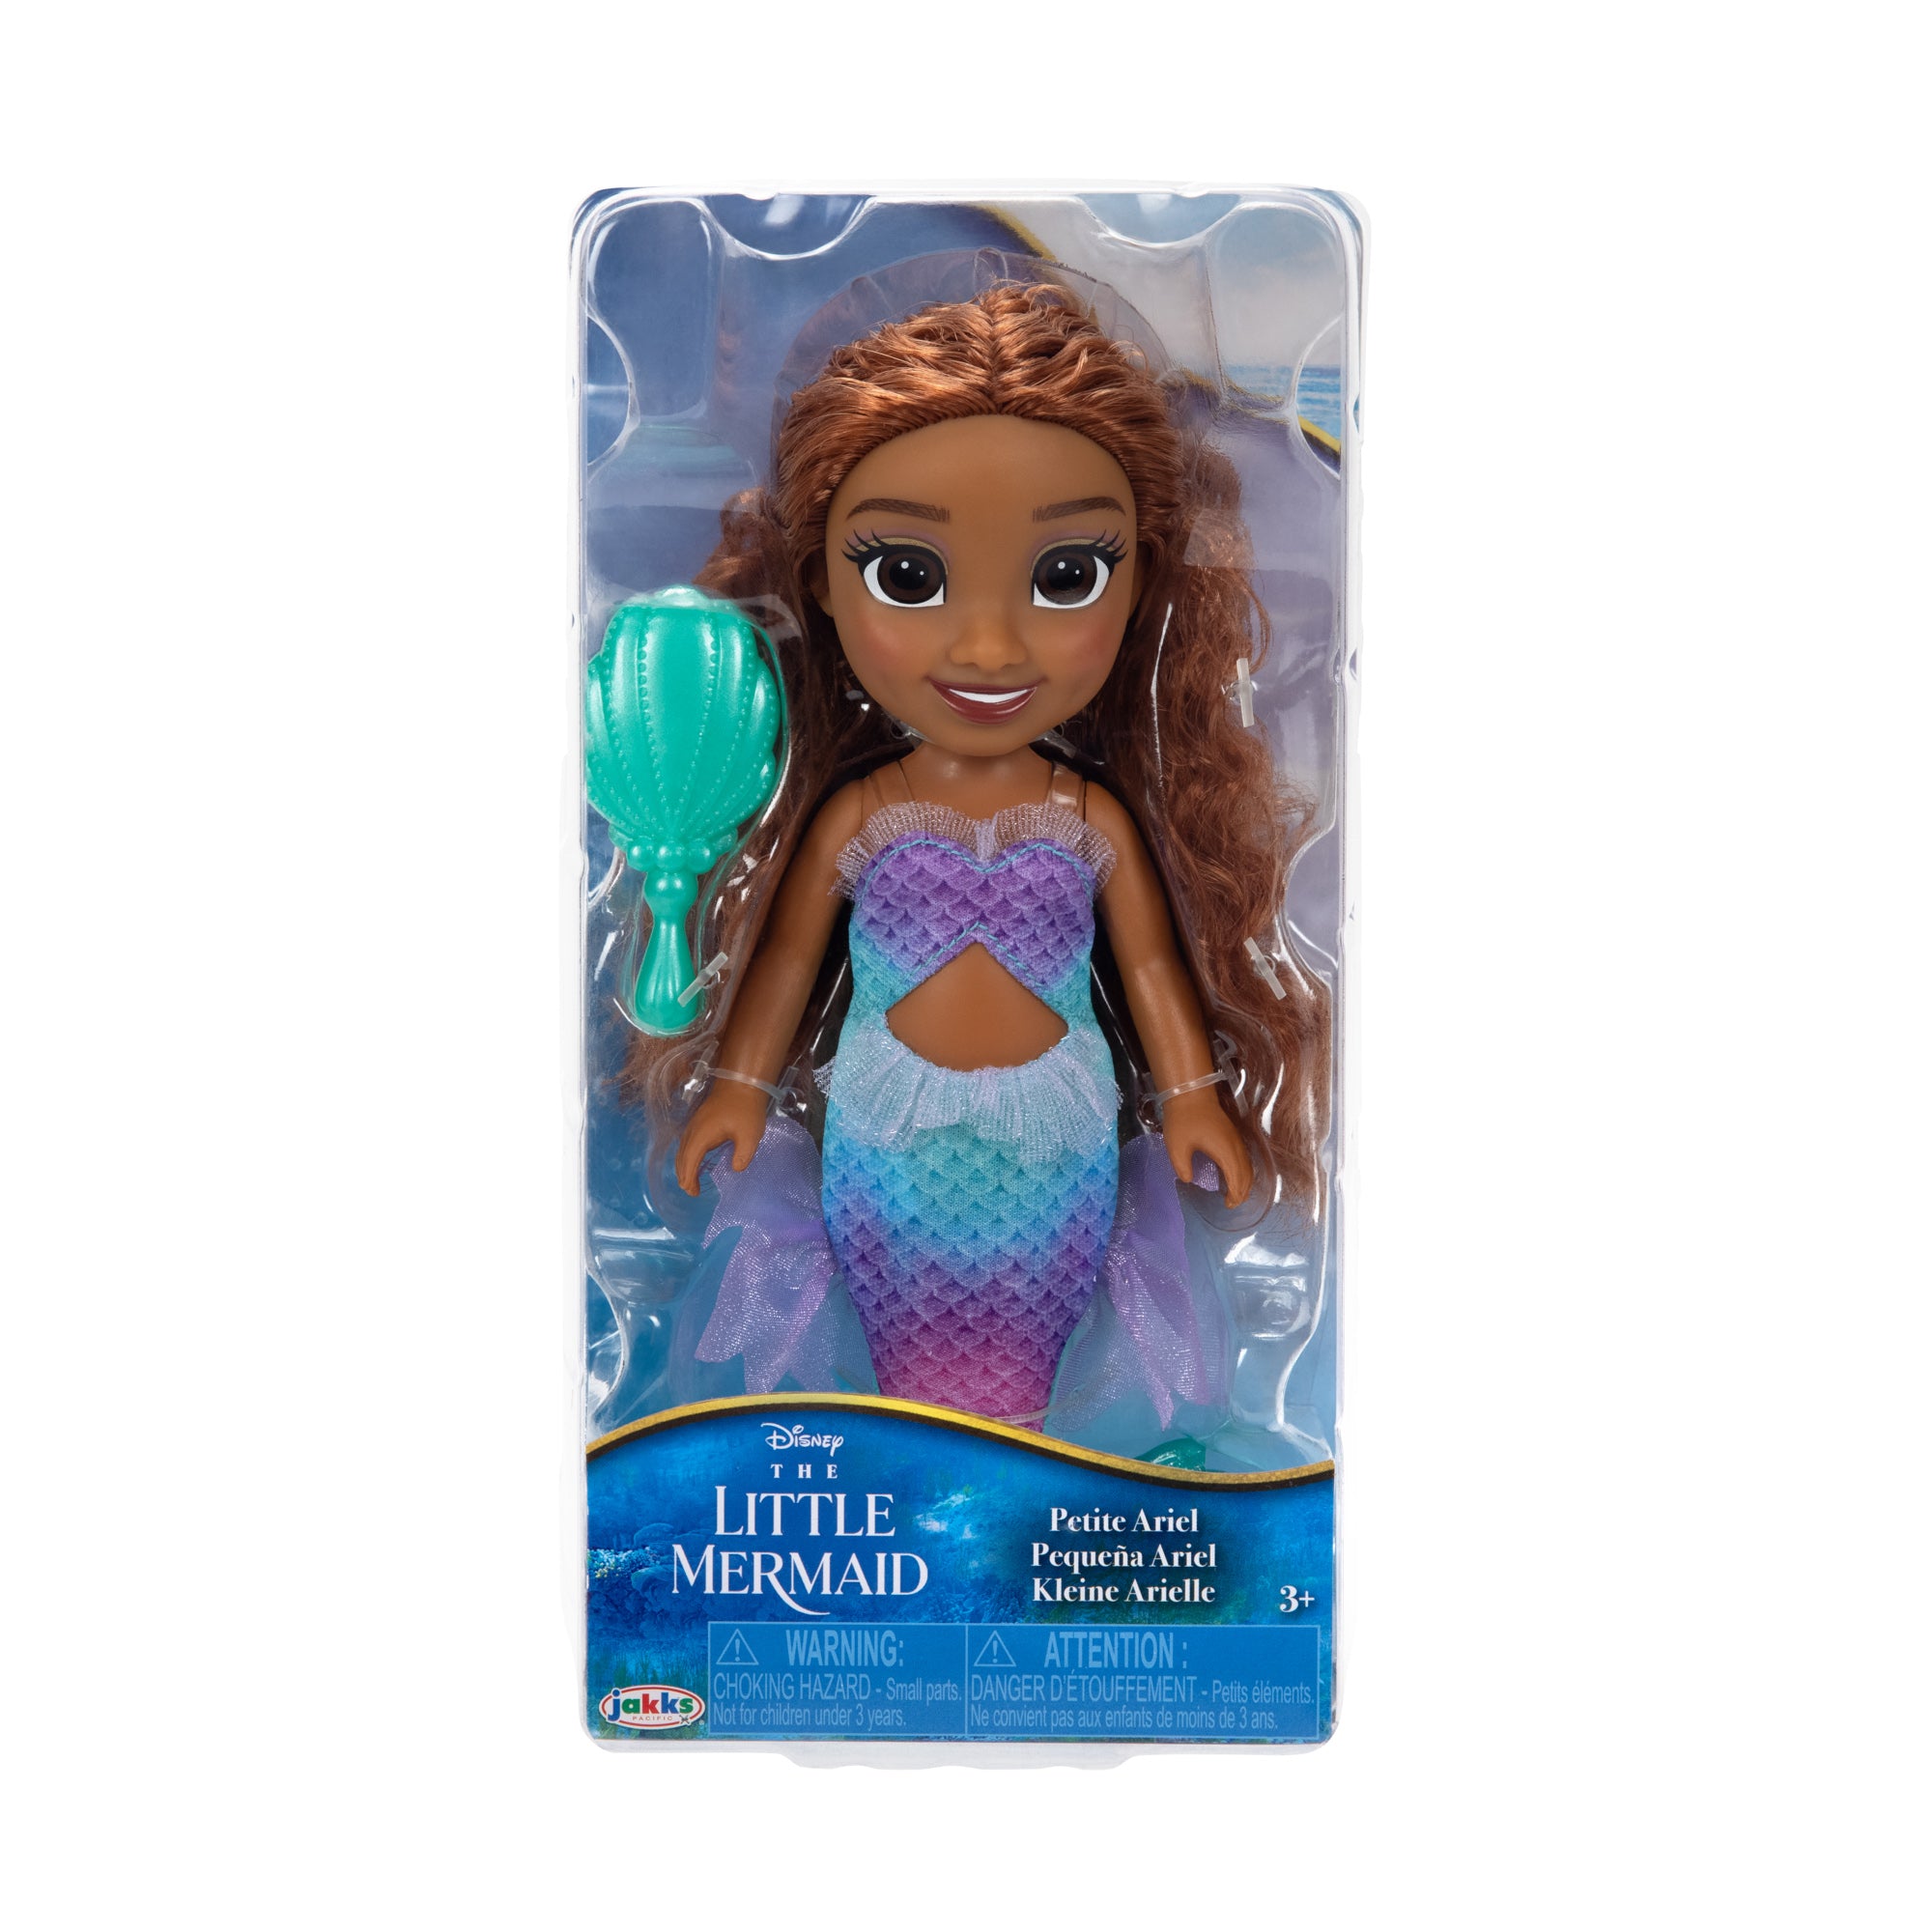 The Little Mermaid 6" Petite Ariel Doll